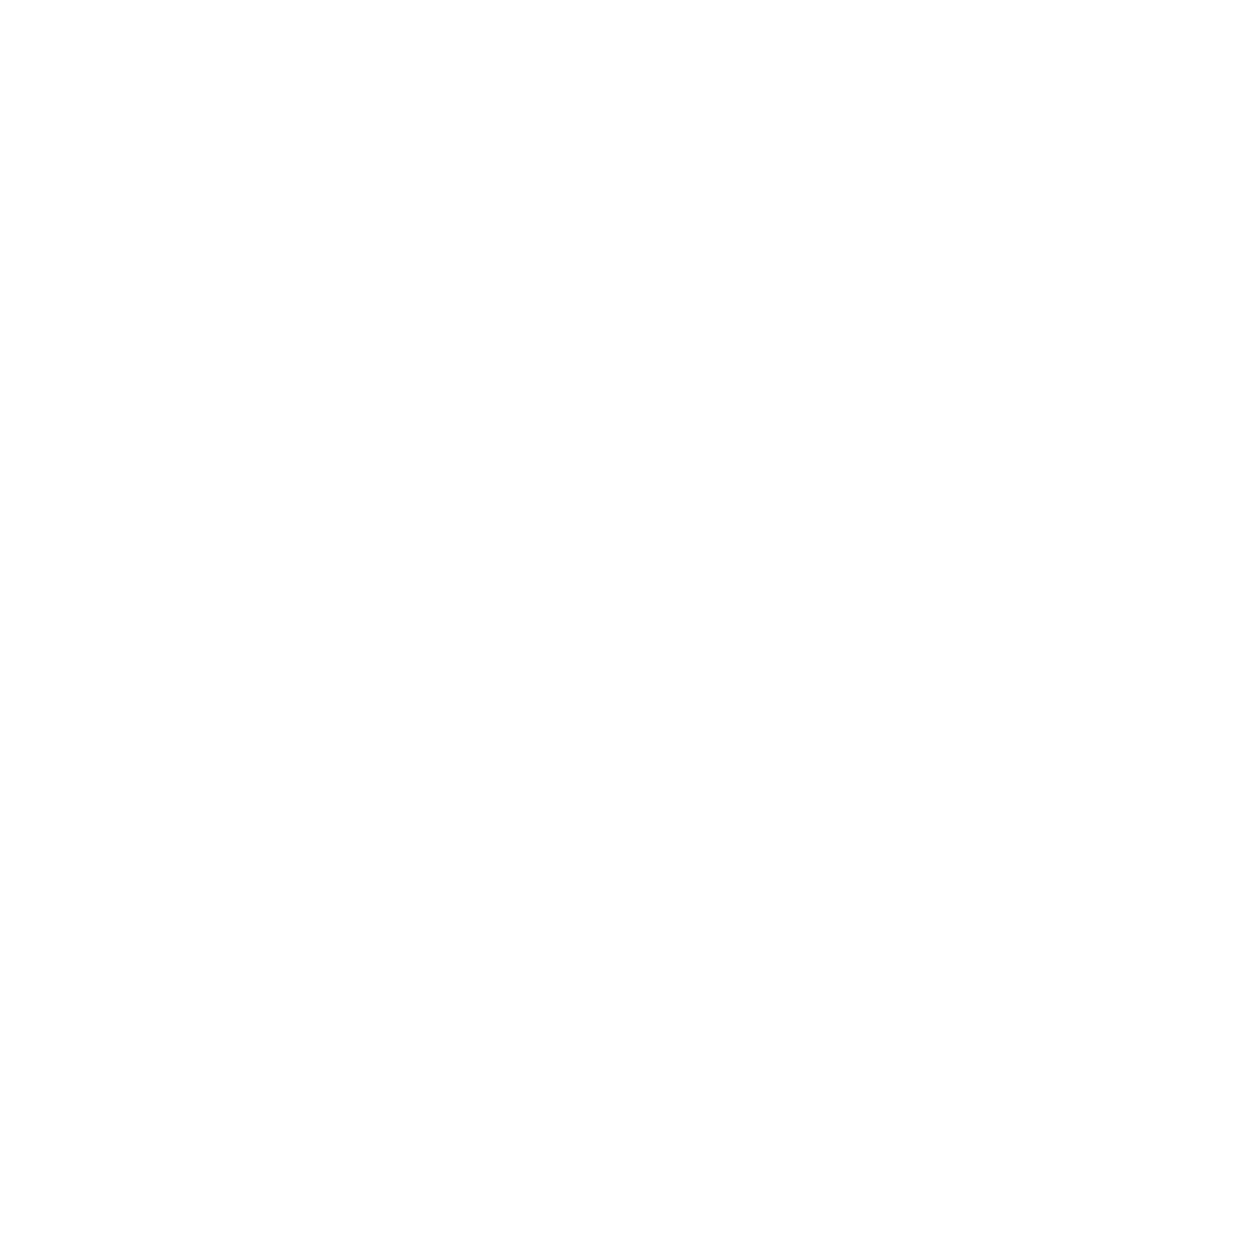 AKG Photography